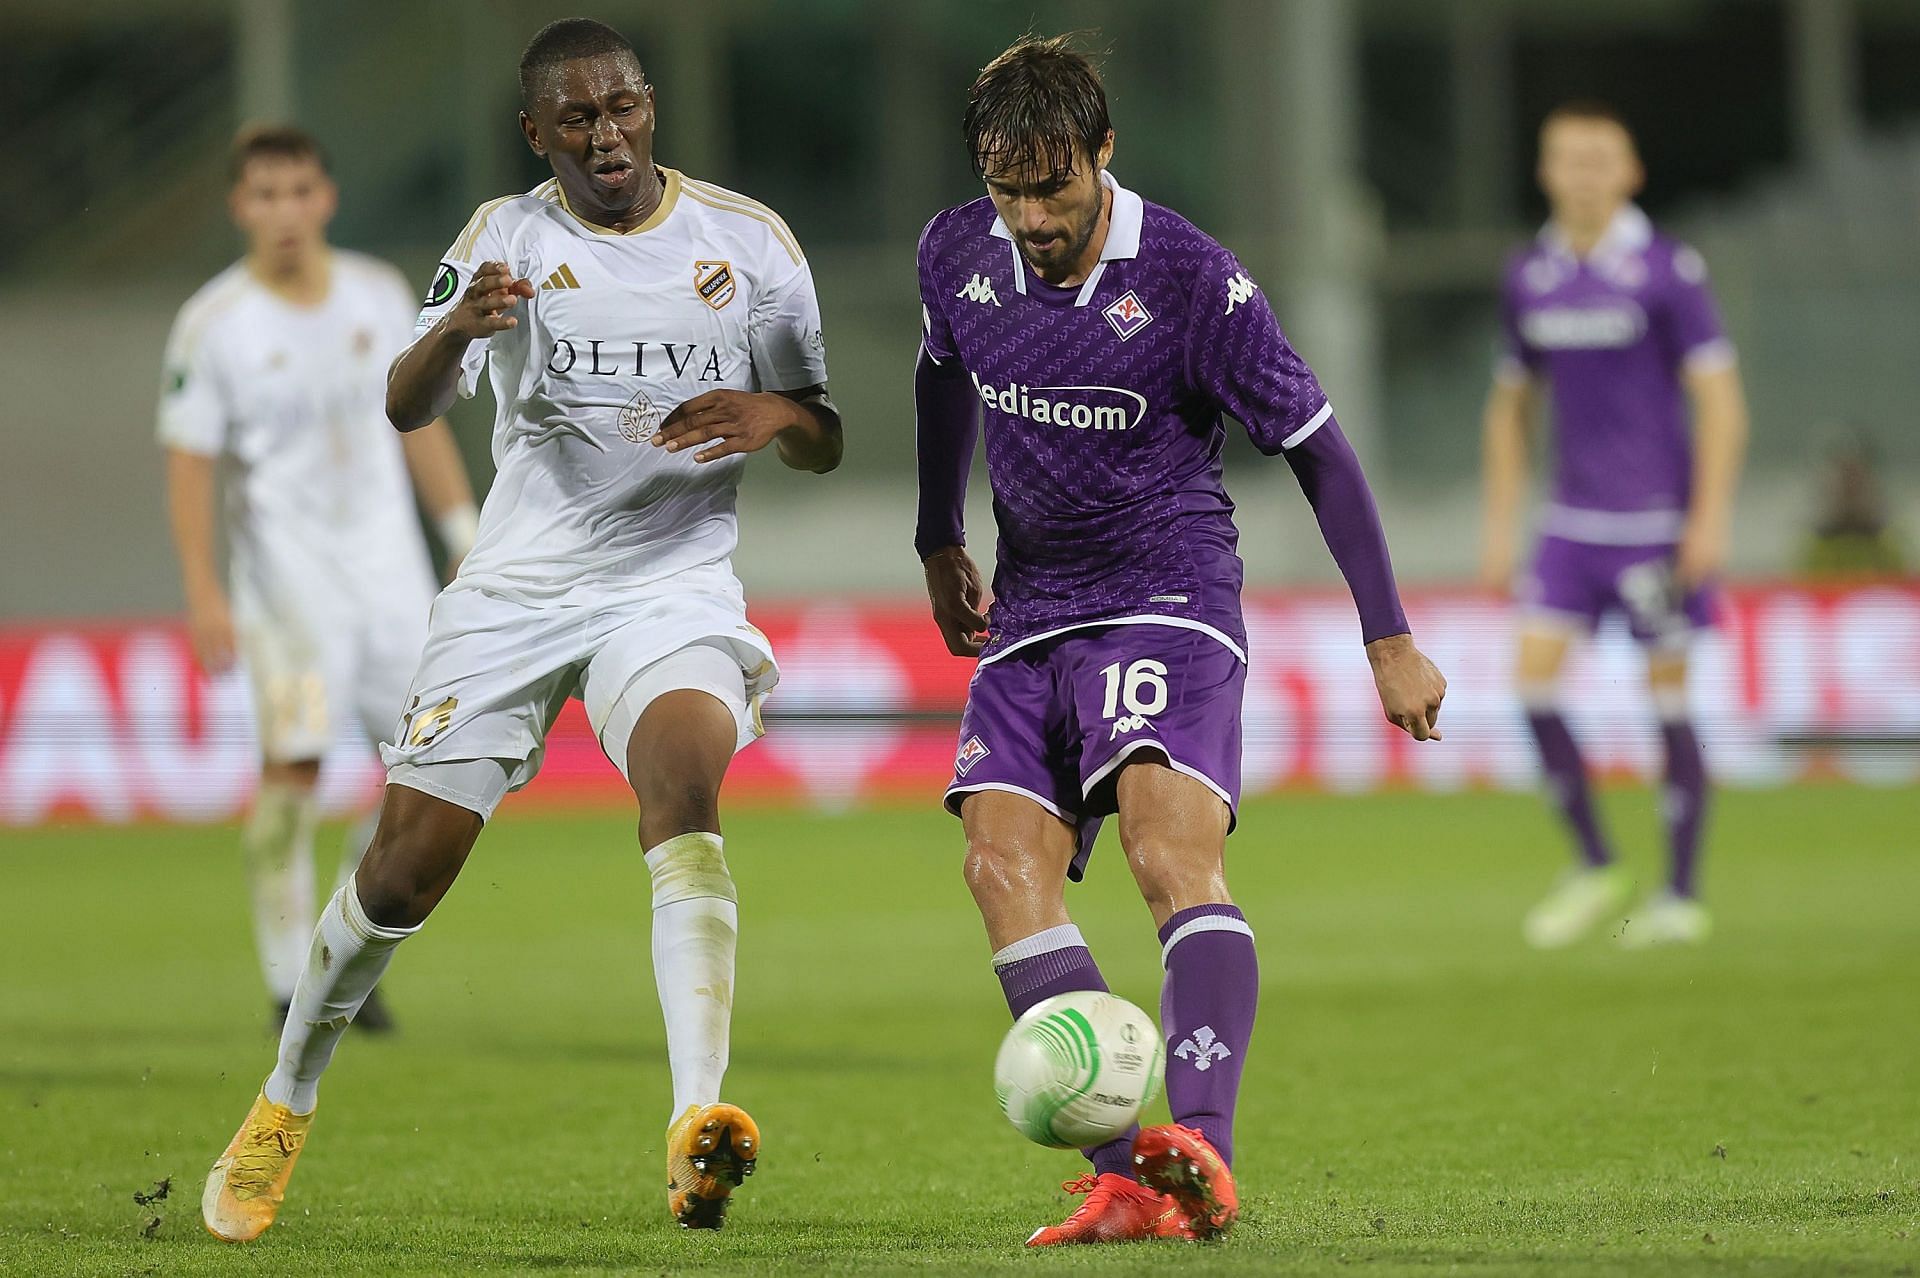 Fiorentina vs Ferencvaros - Preview, Prediction, and Betting Tips